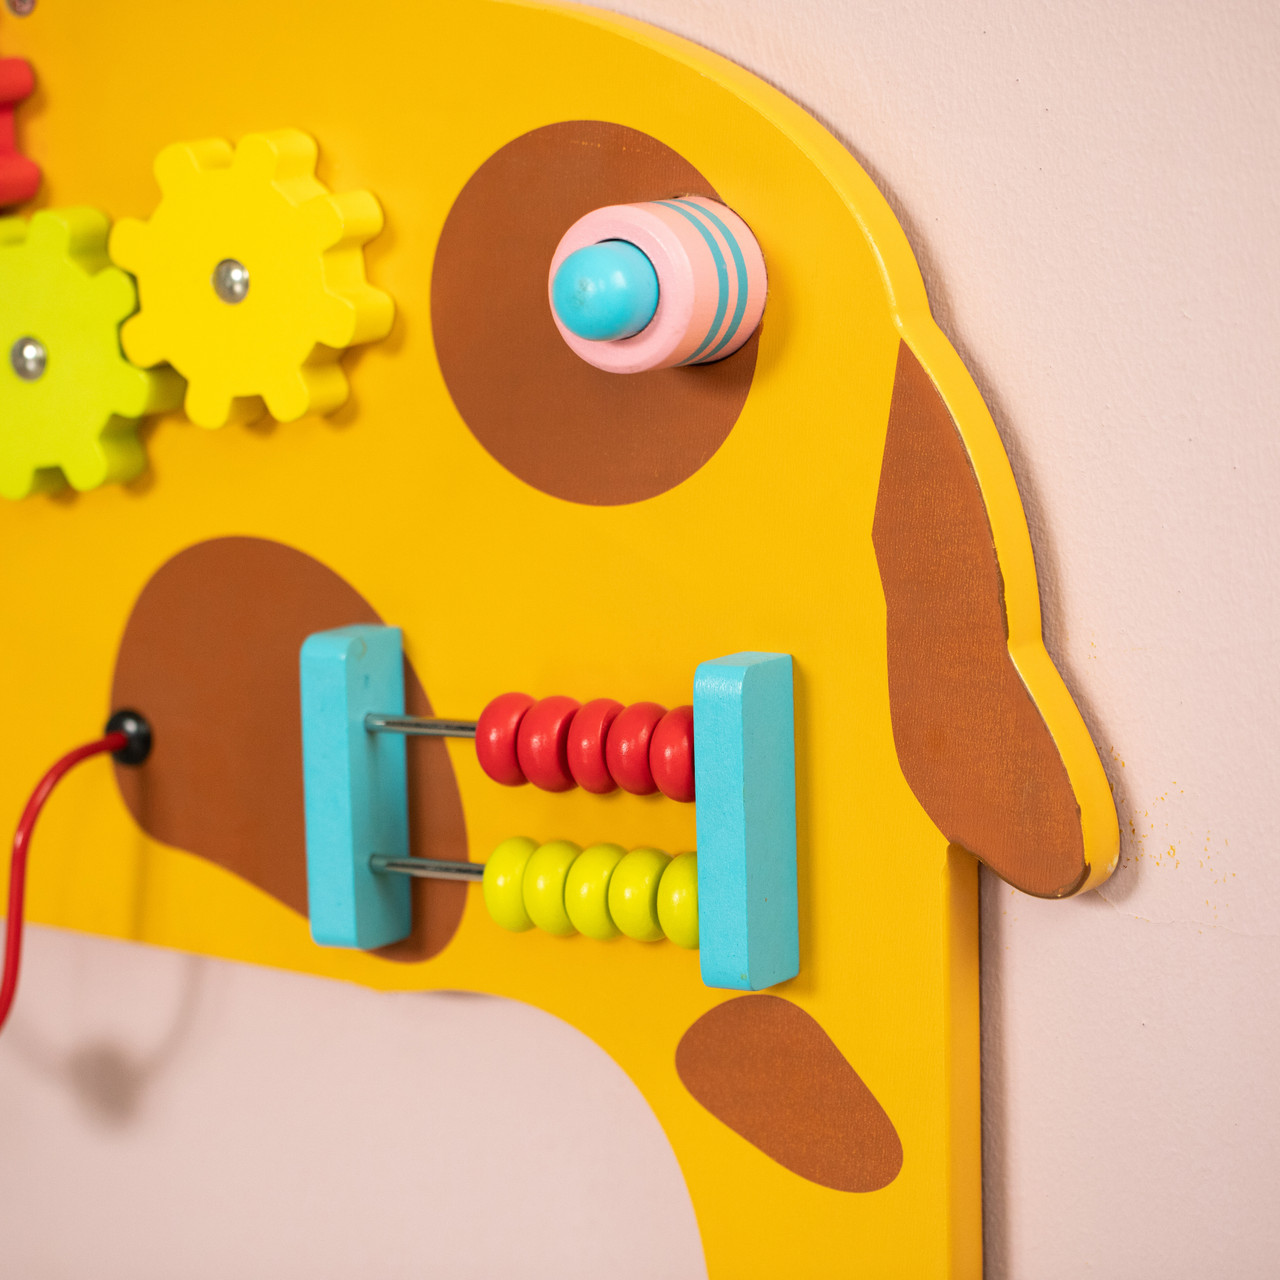 Playsa Face Boy Wall Activity Toy, Sensory